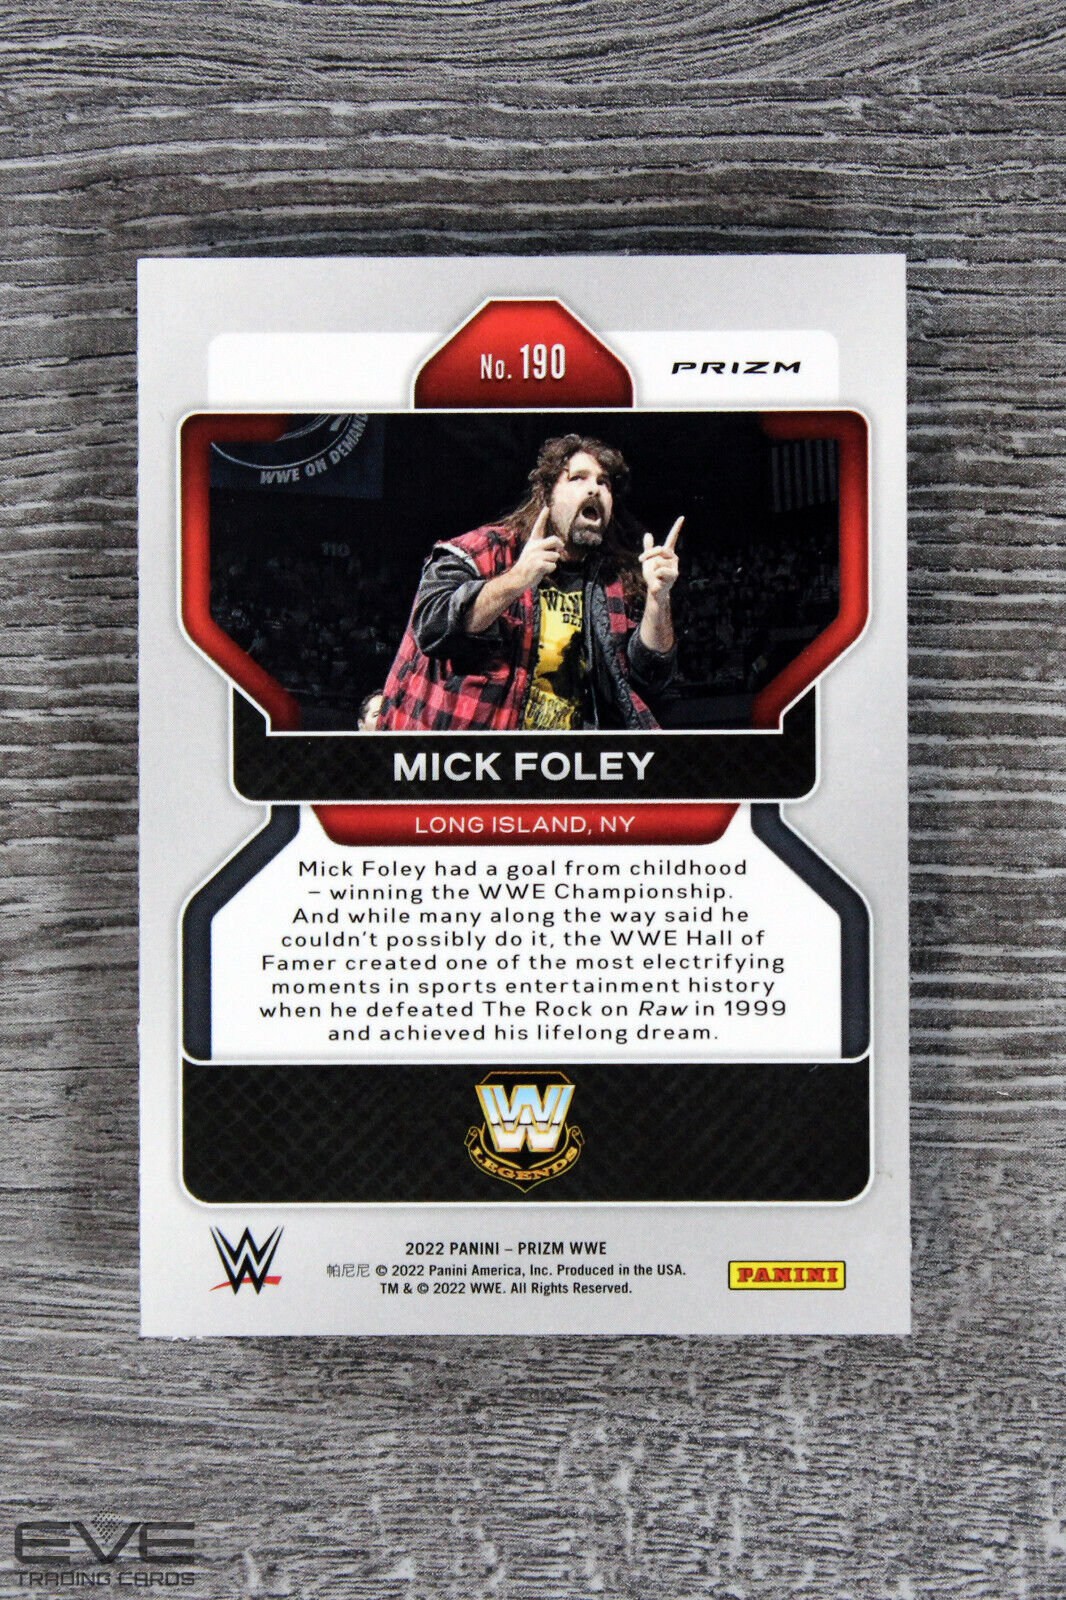 2022 Panini Prizm WWE Red Ruby Wave Prizm Card #190 Mick Foley - NM/M